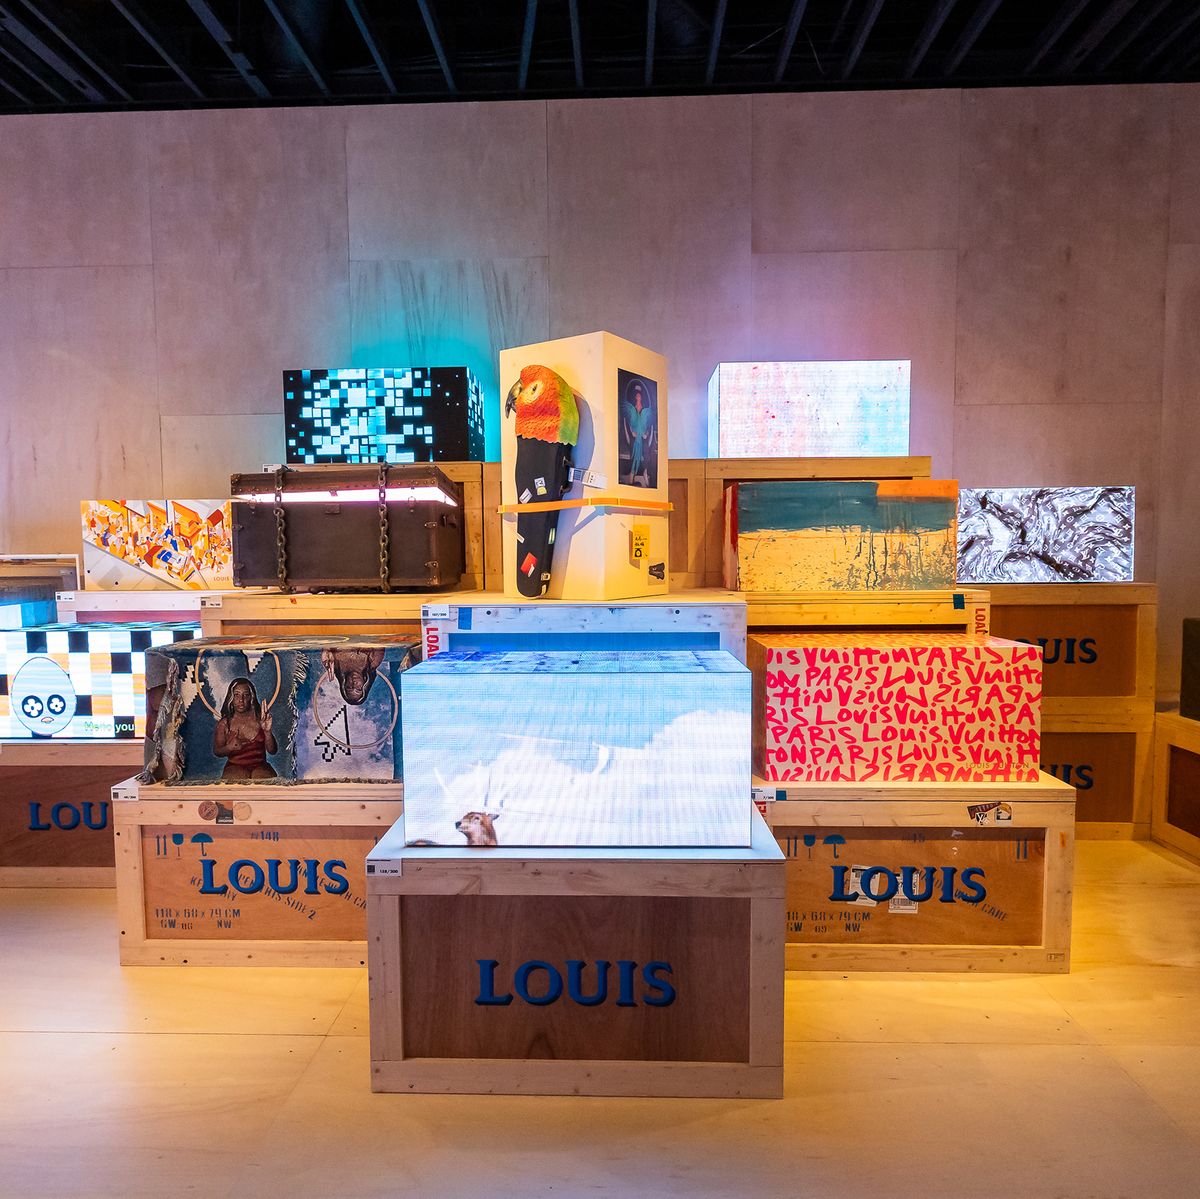 Walker Boutique - Our repurposed Louis Vuitton pieces are